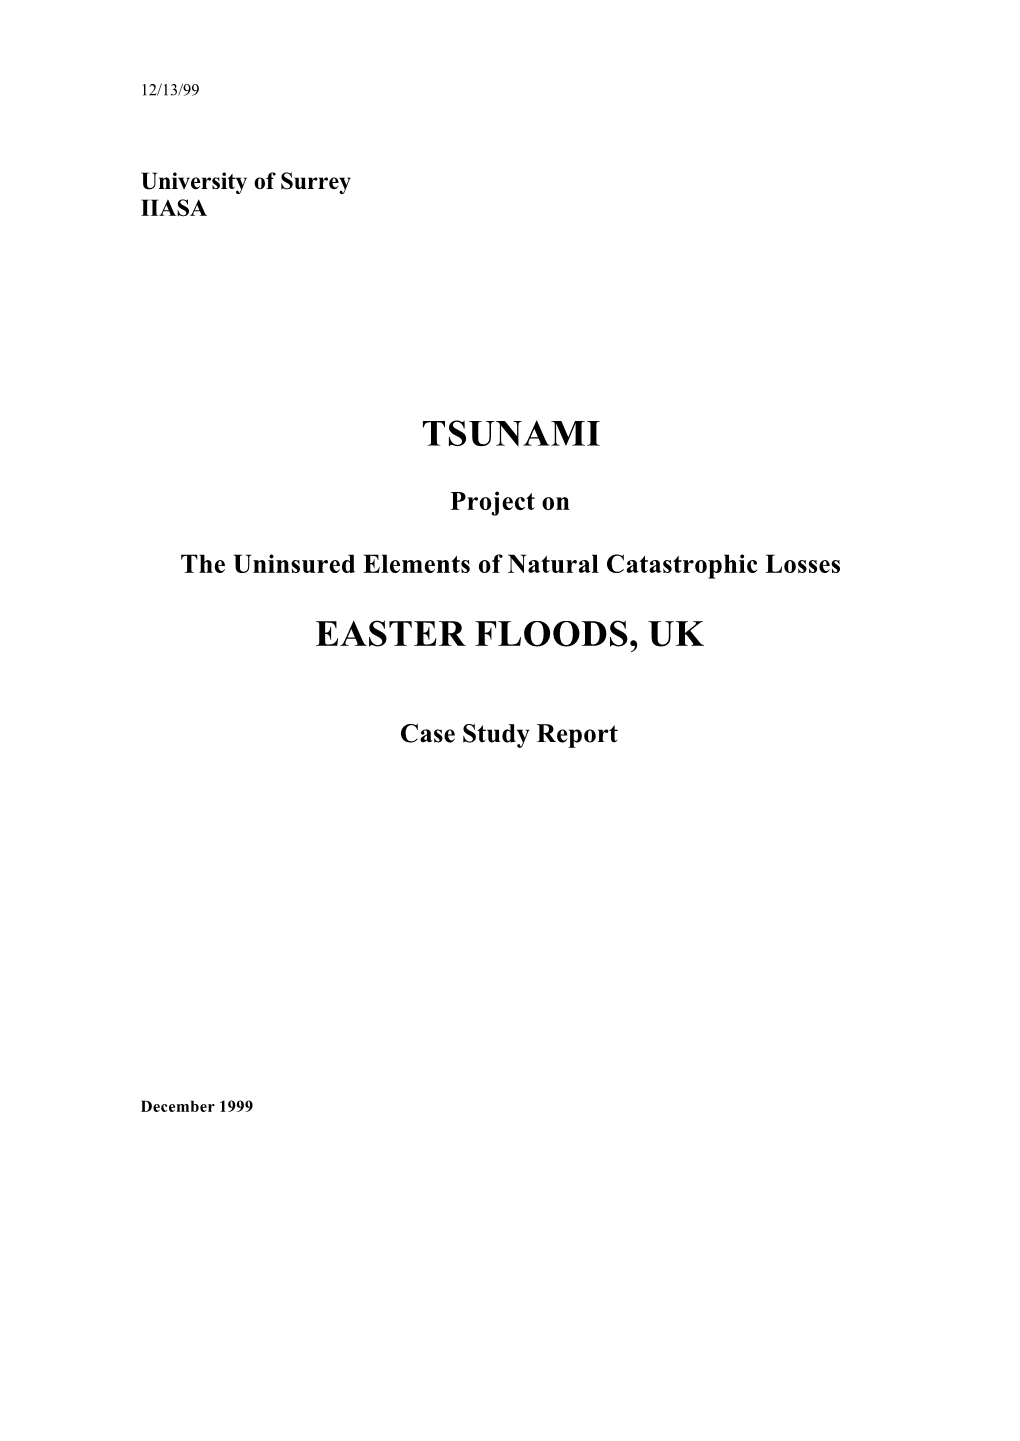 Tsunami Easter Floods, Uk